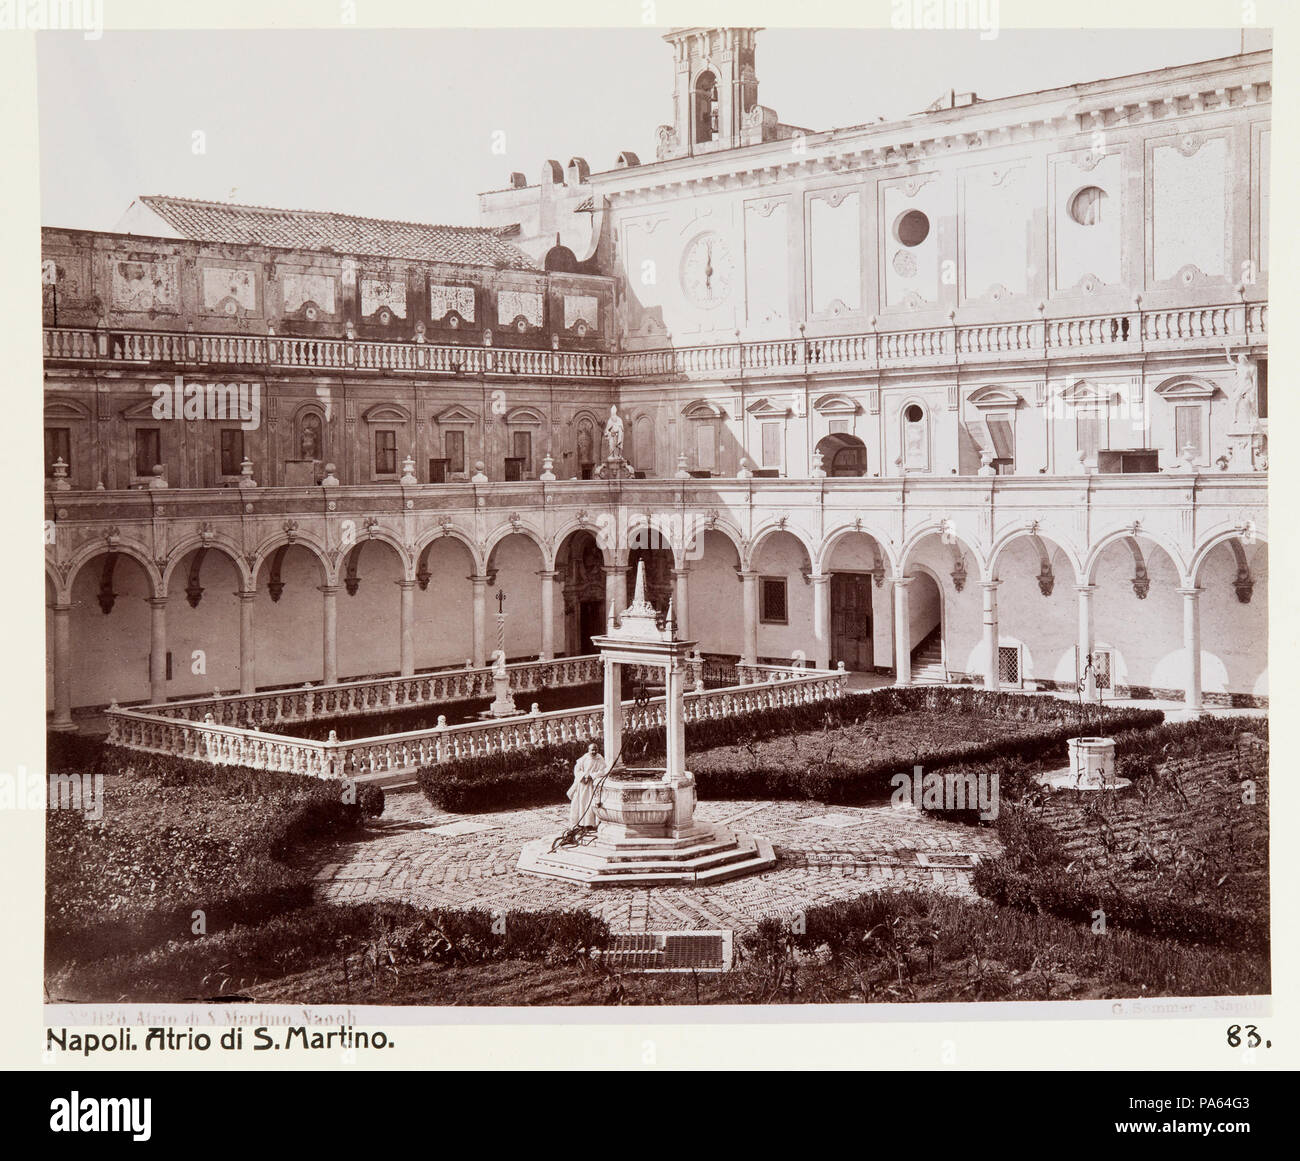 85 Fotografi av Atrio di S. Martino. Neapel, Italien - Hallwylska museet - 106842 Stock Photo